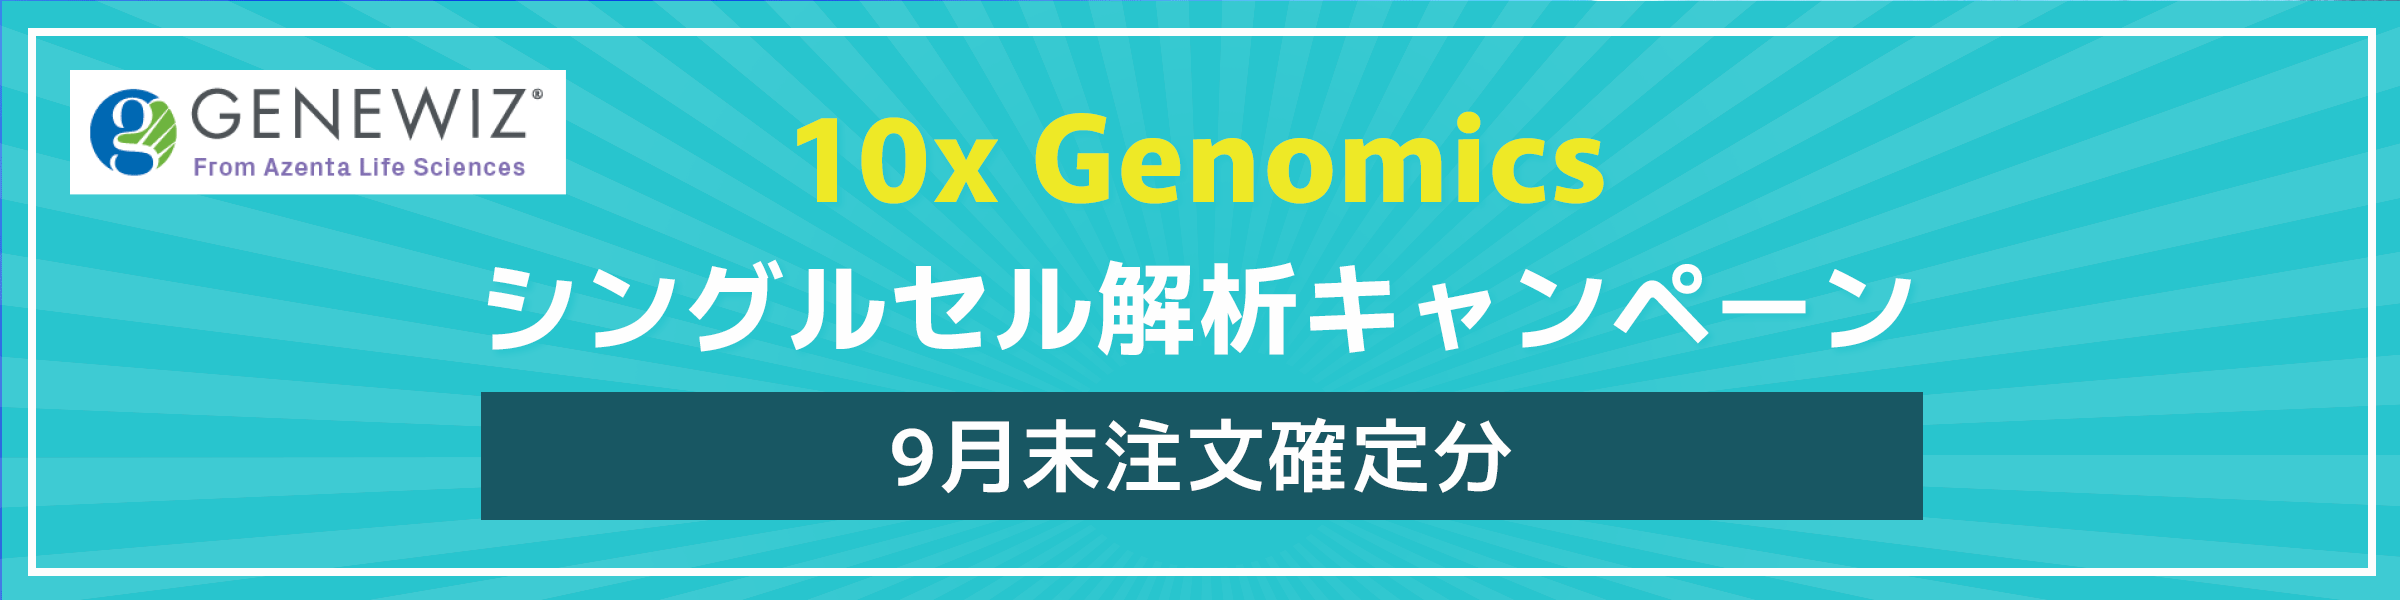 10x Genomics シングルセル解析キャンペーン